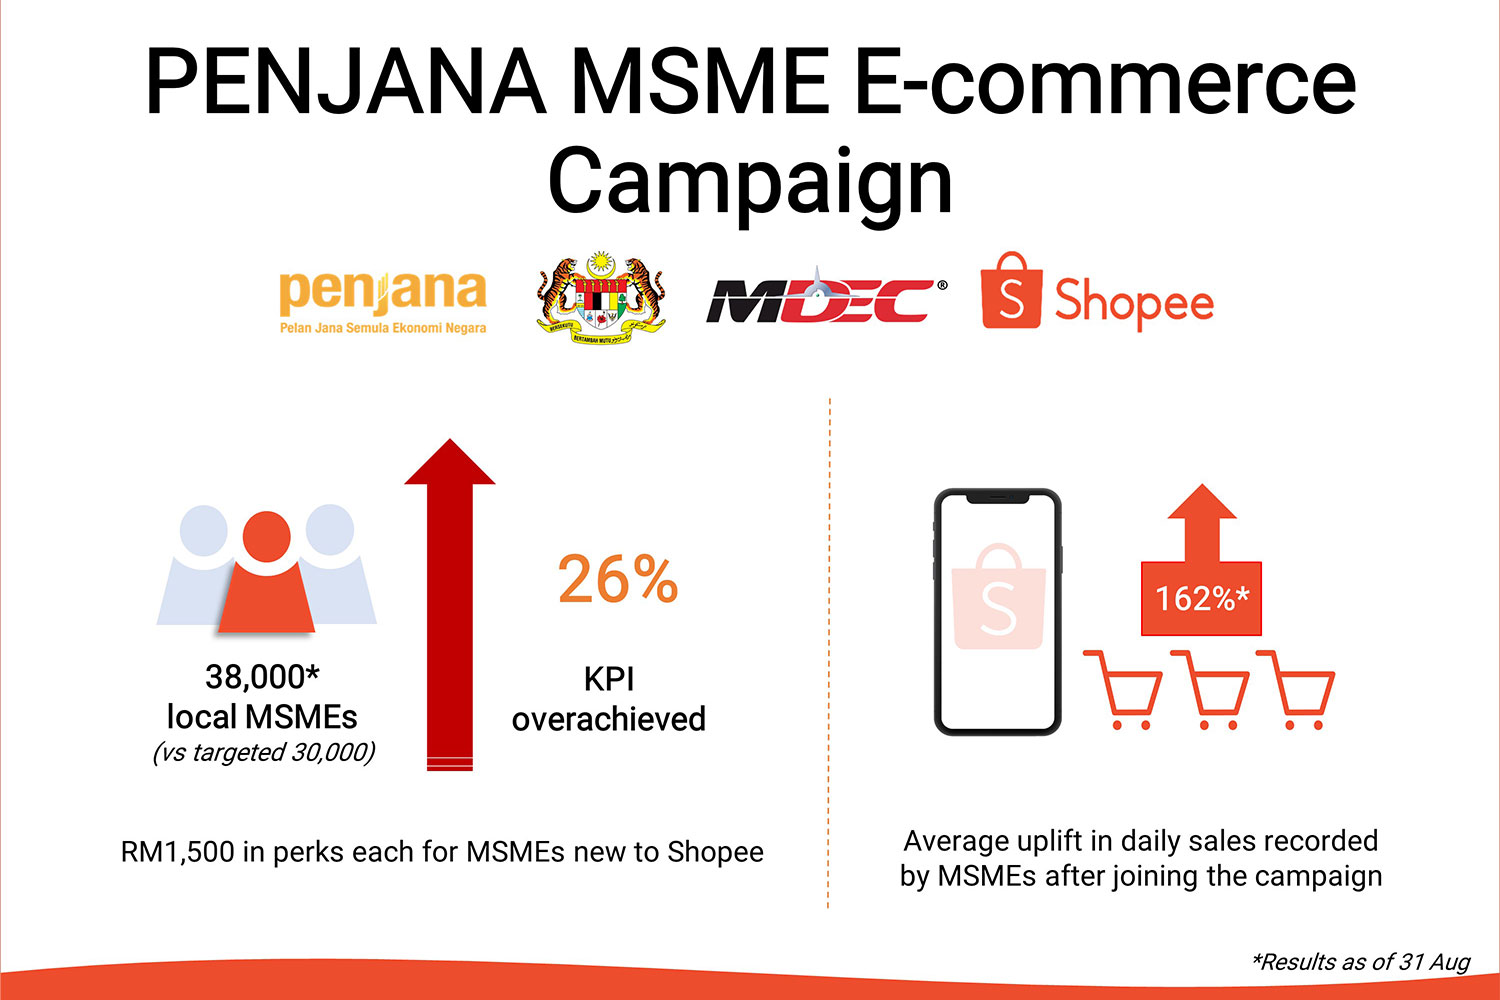 PENJANA MSME E-commerce Campaign Infographic